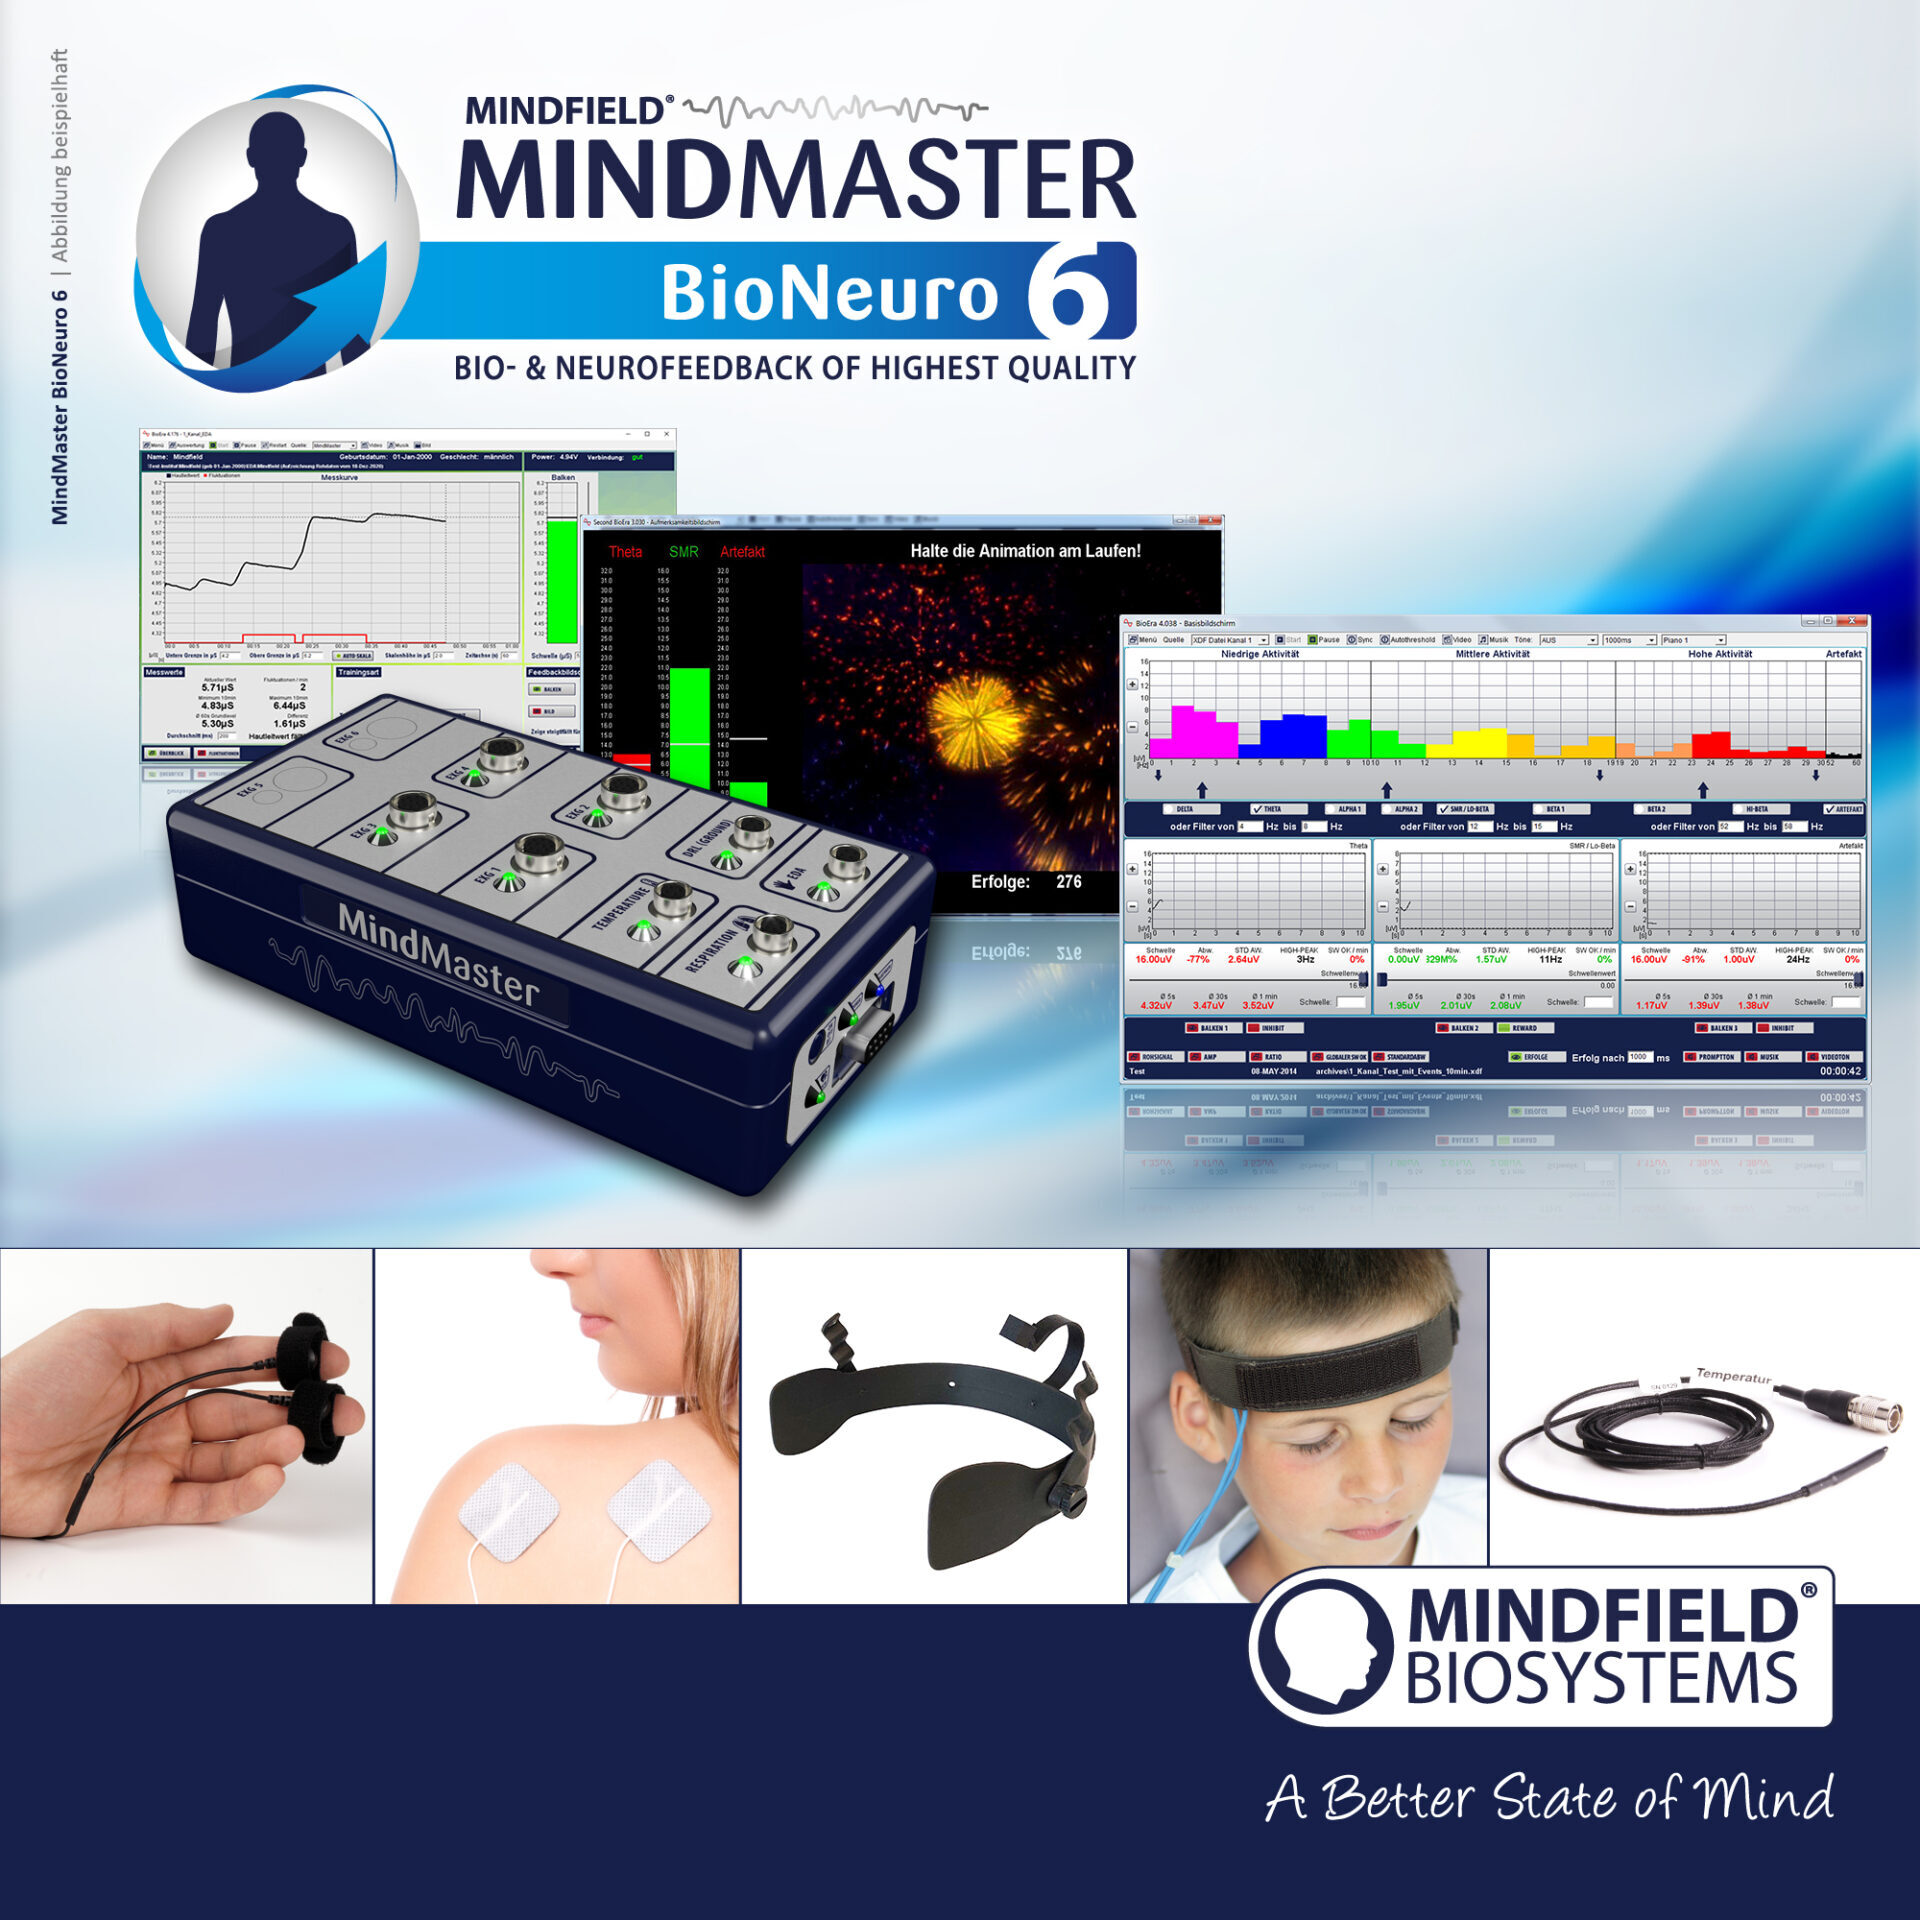 Mindfield-MindMaster-BioNeuro-6